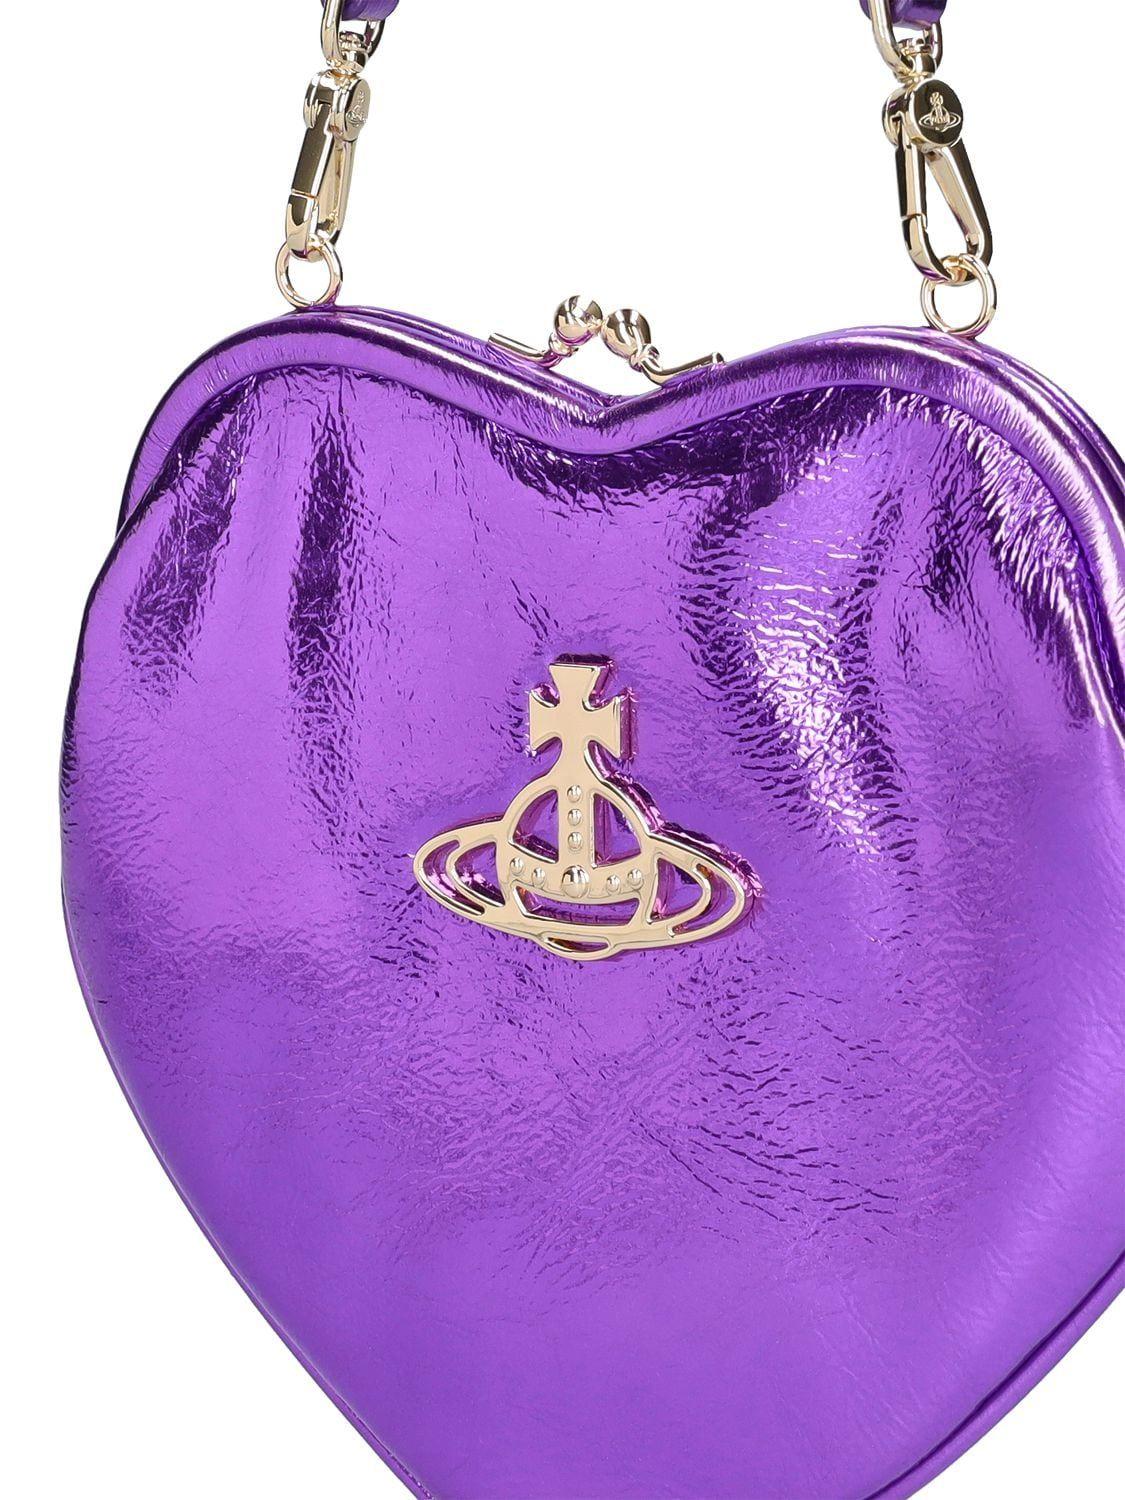 Vivienne Westwood Belle Heart Faux Leather Frame Bag In Purple